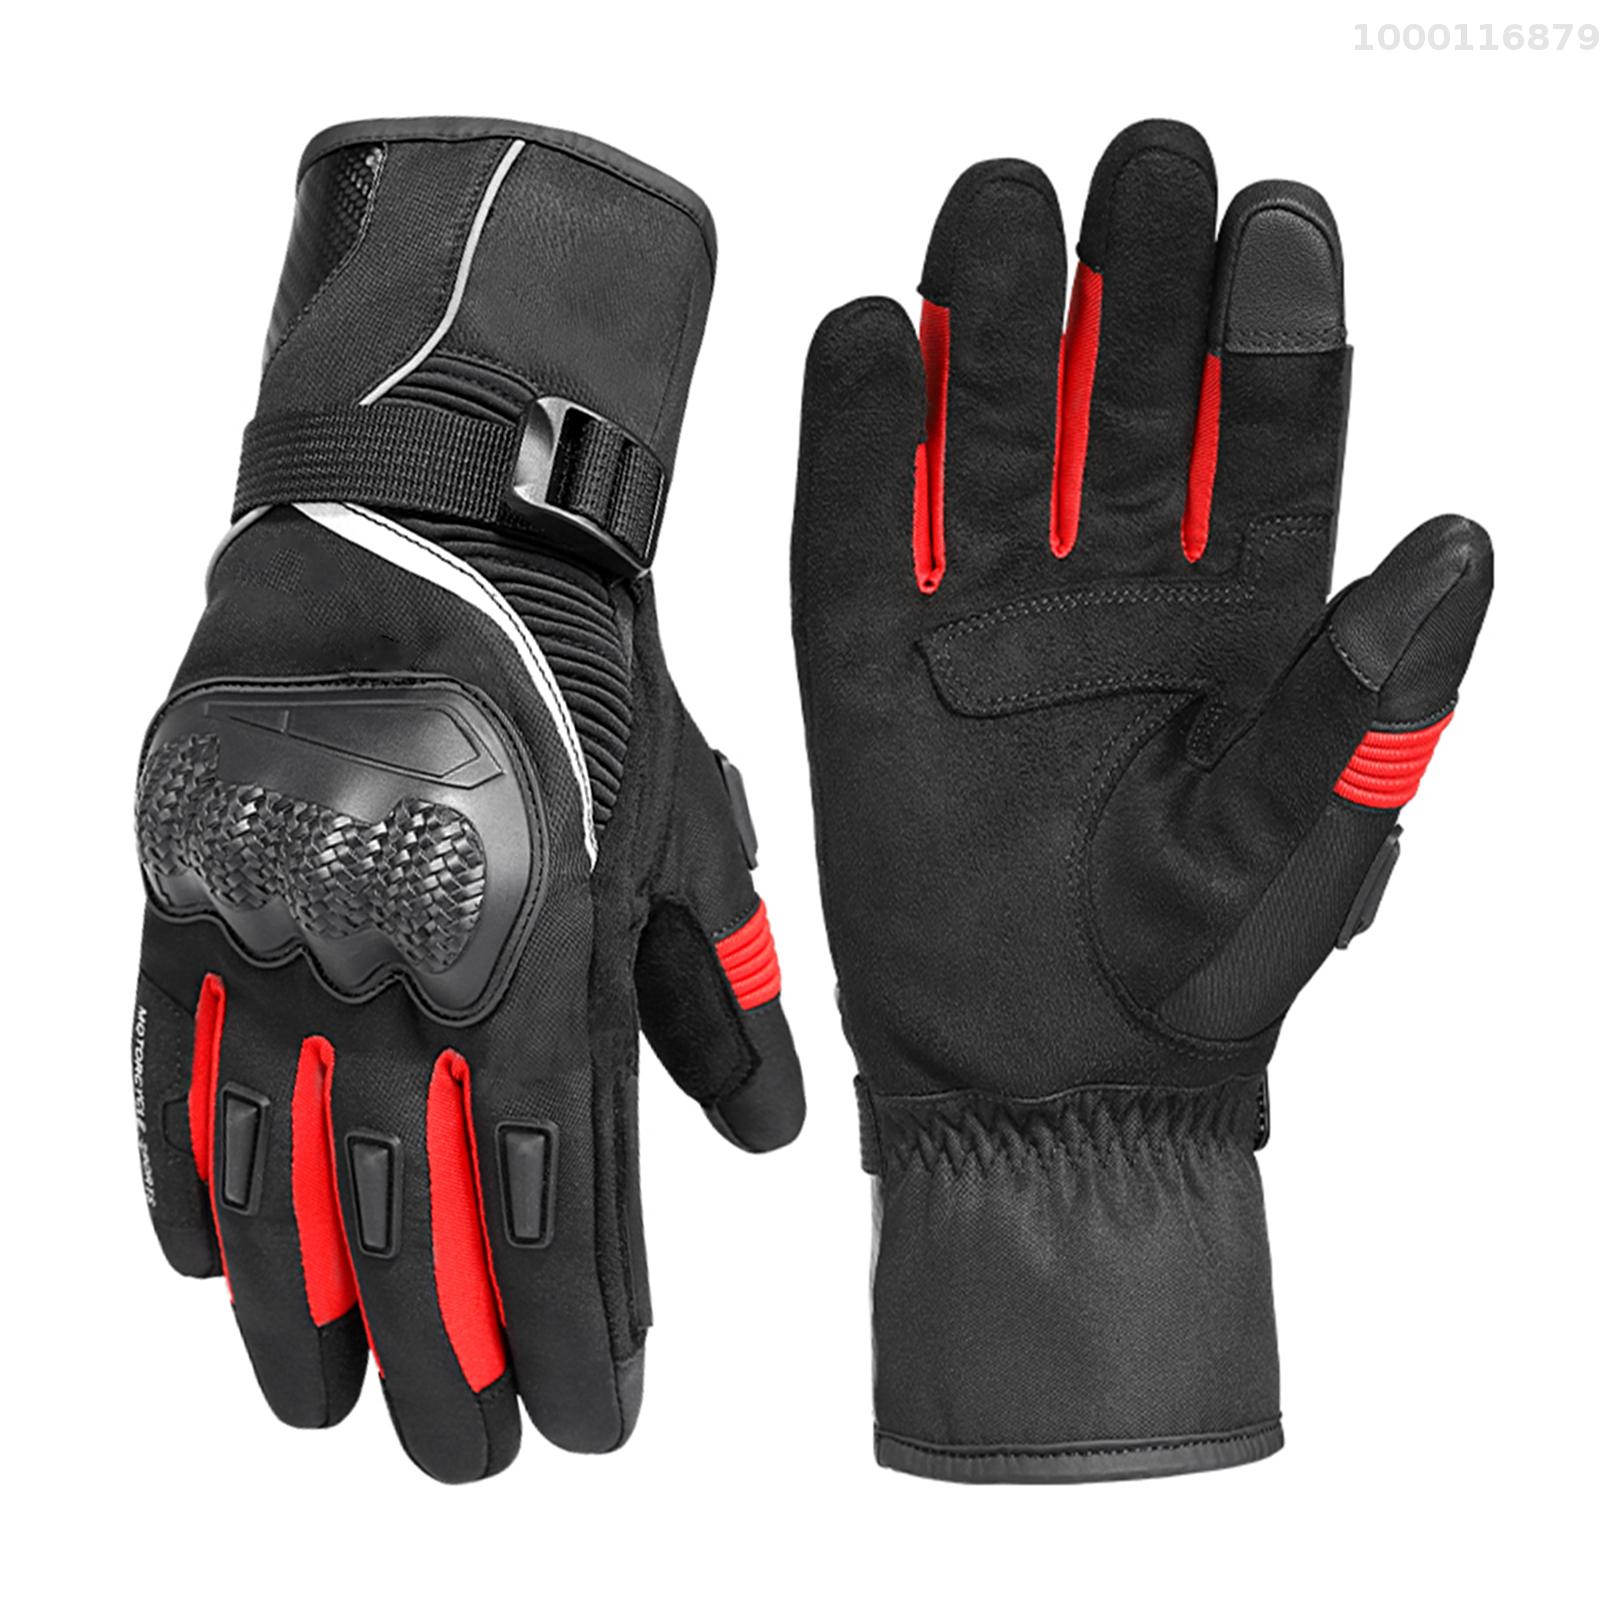 Winter Motorcycle Gloves Waterproof Cold Weather Motorcycle Gloves Warm